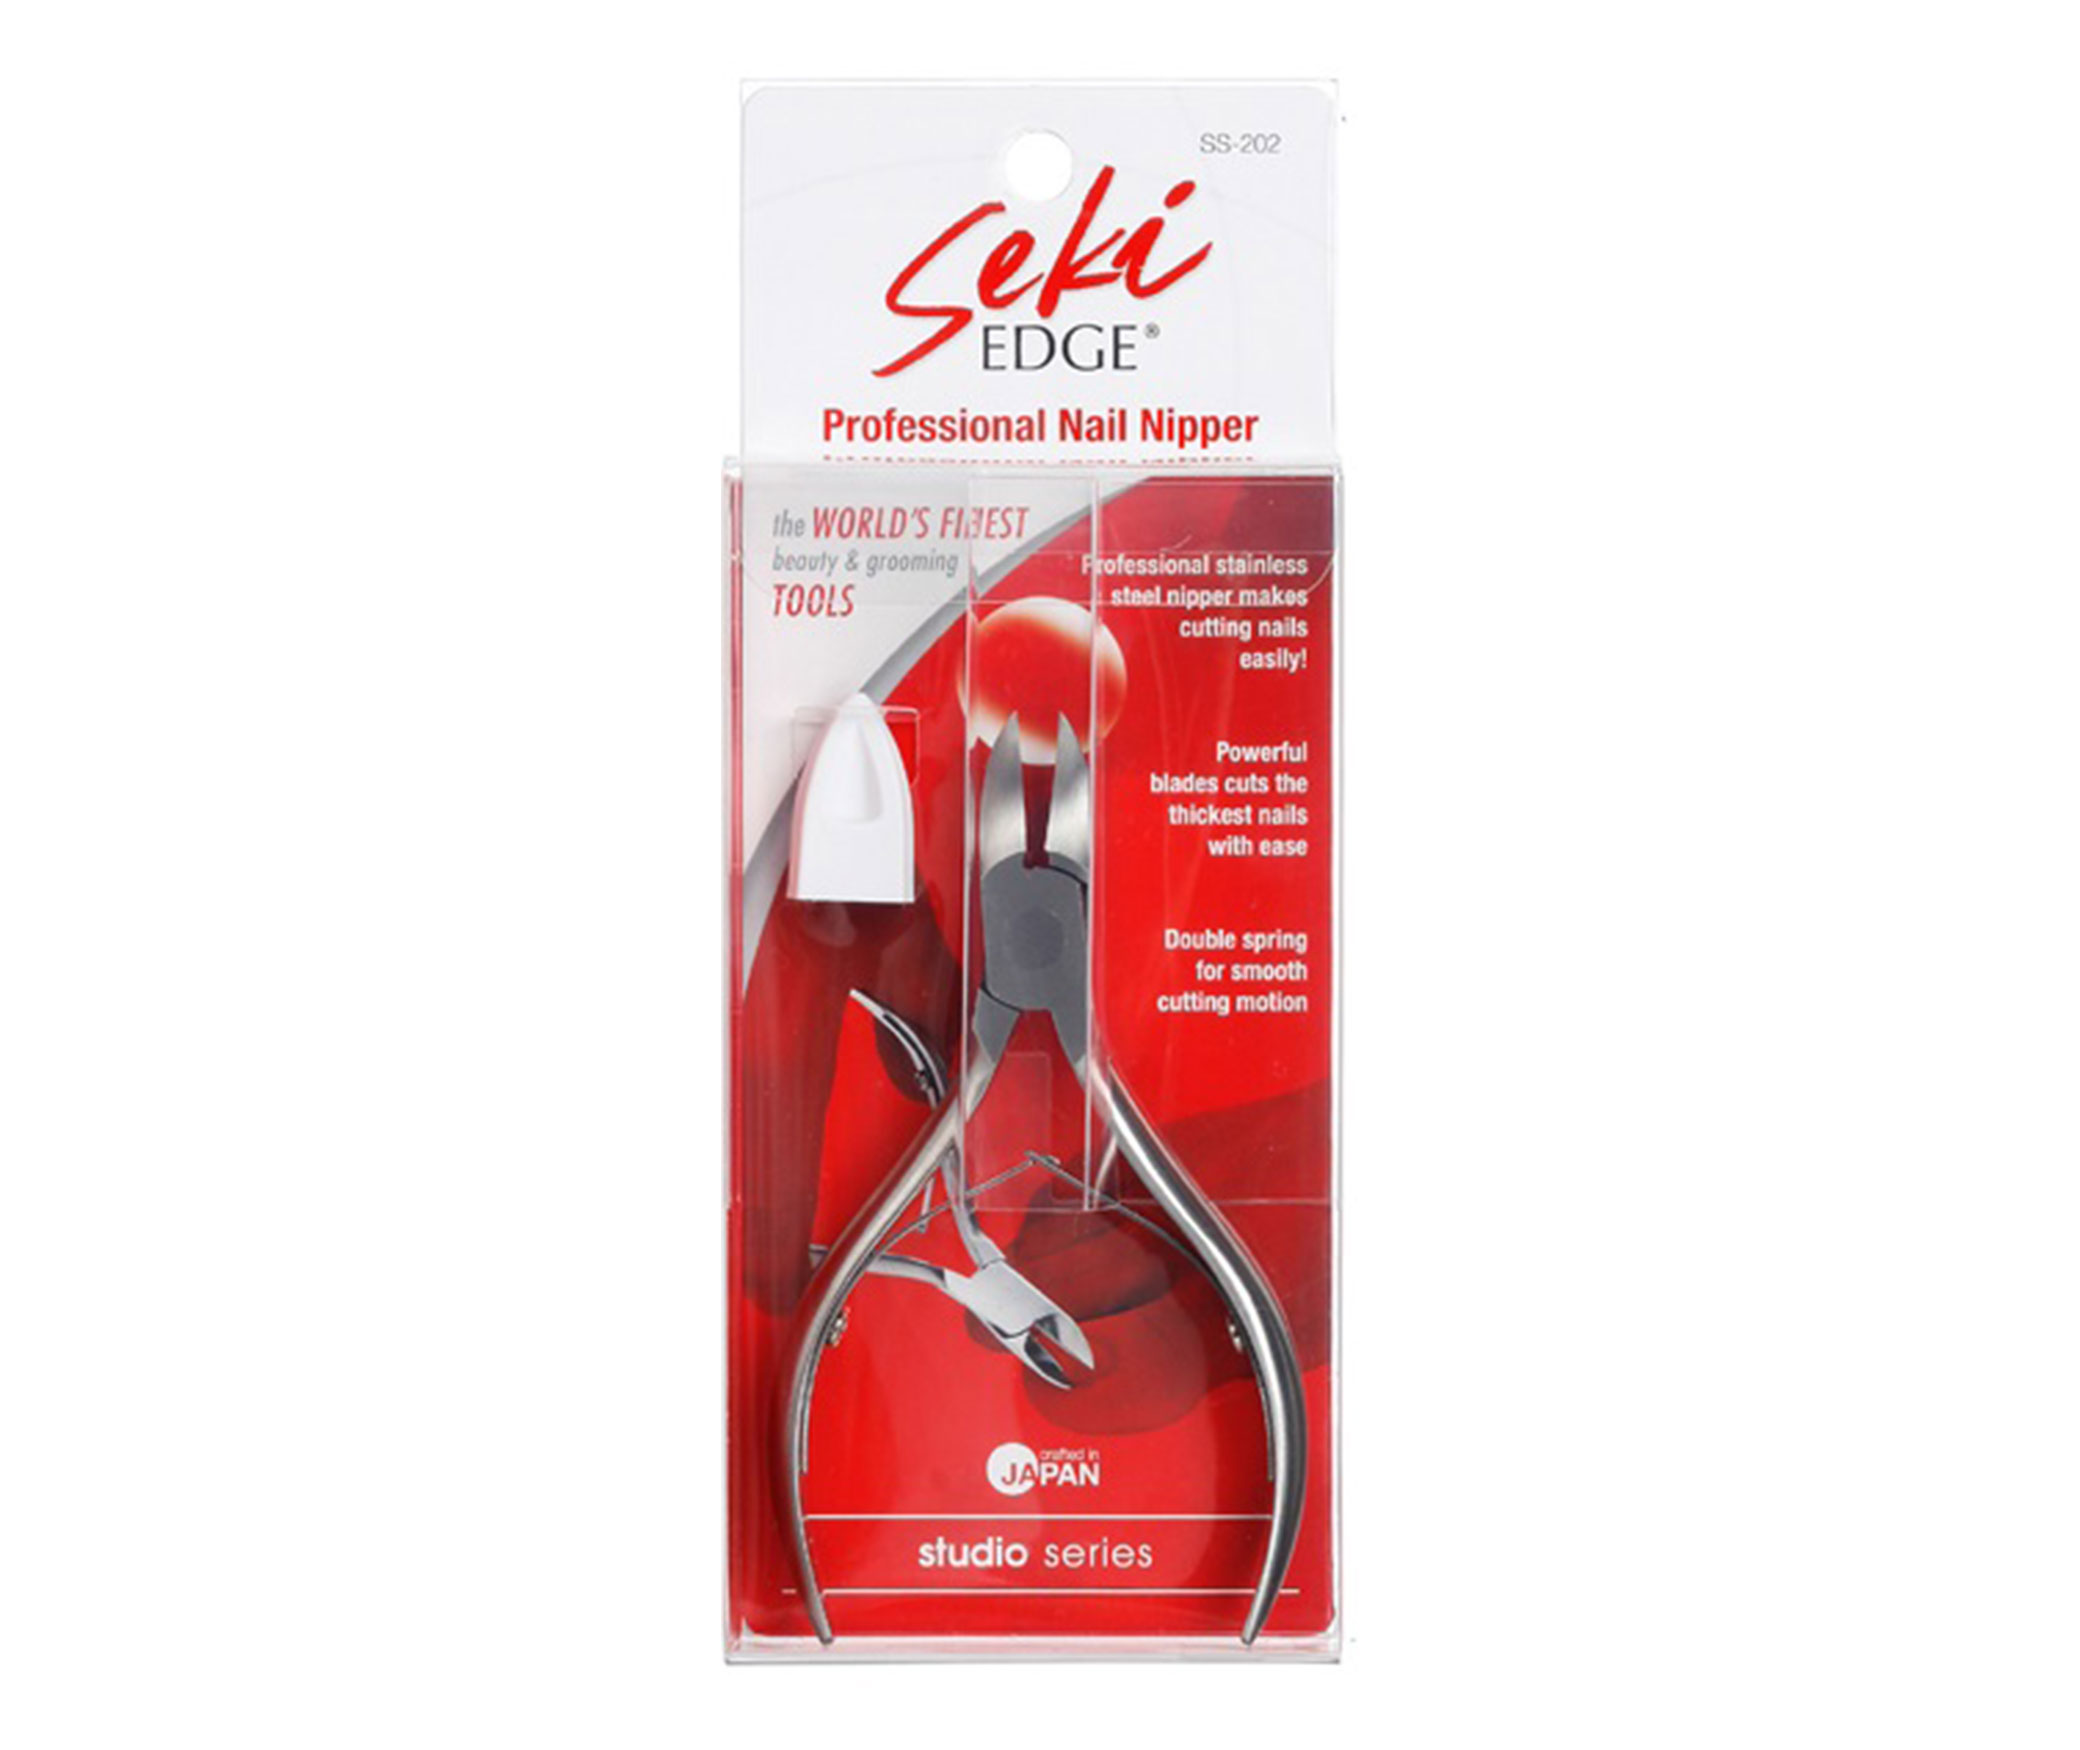 Seki Edge Professional Nail Nipper (SS-202) package